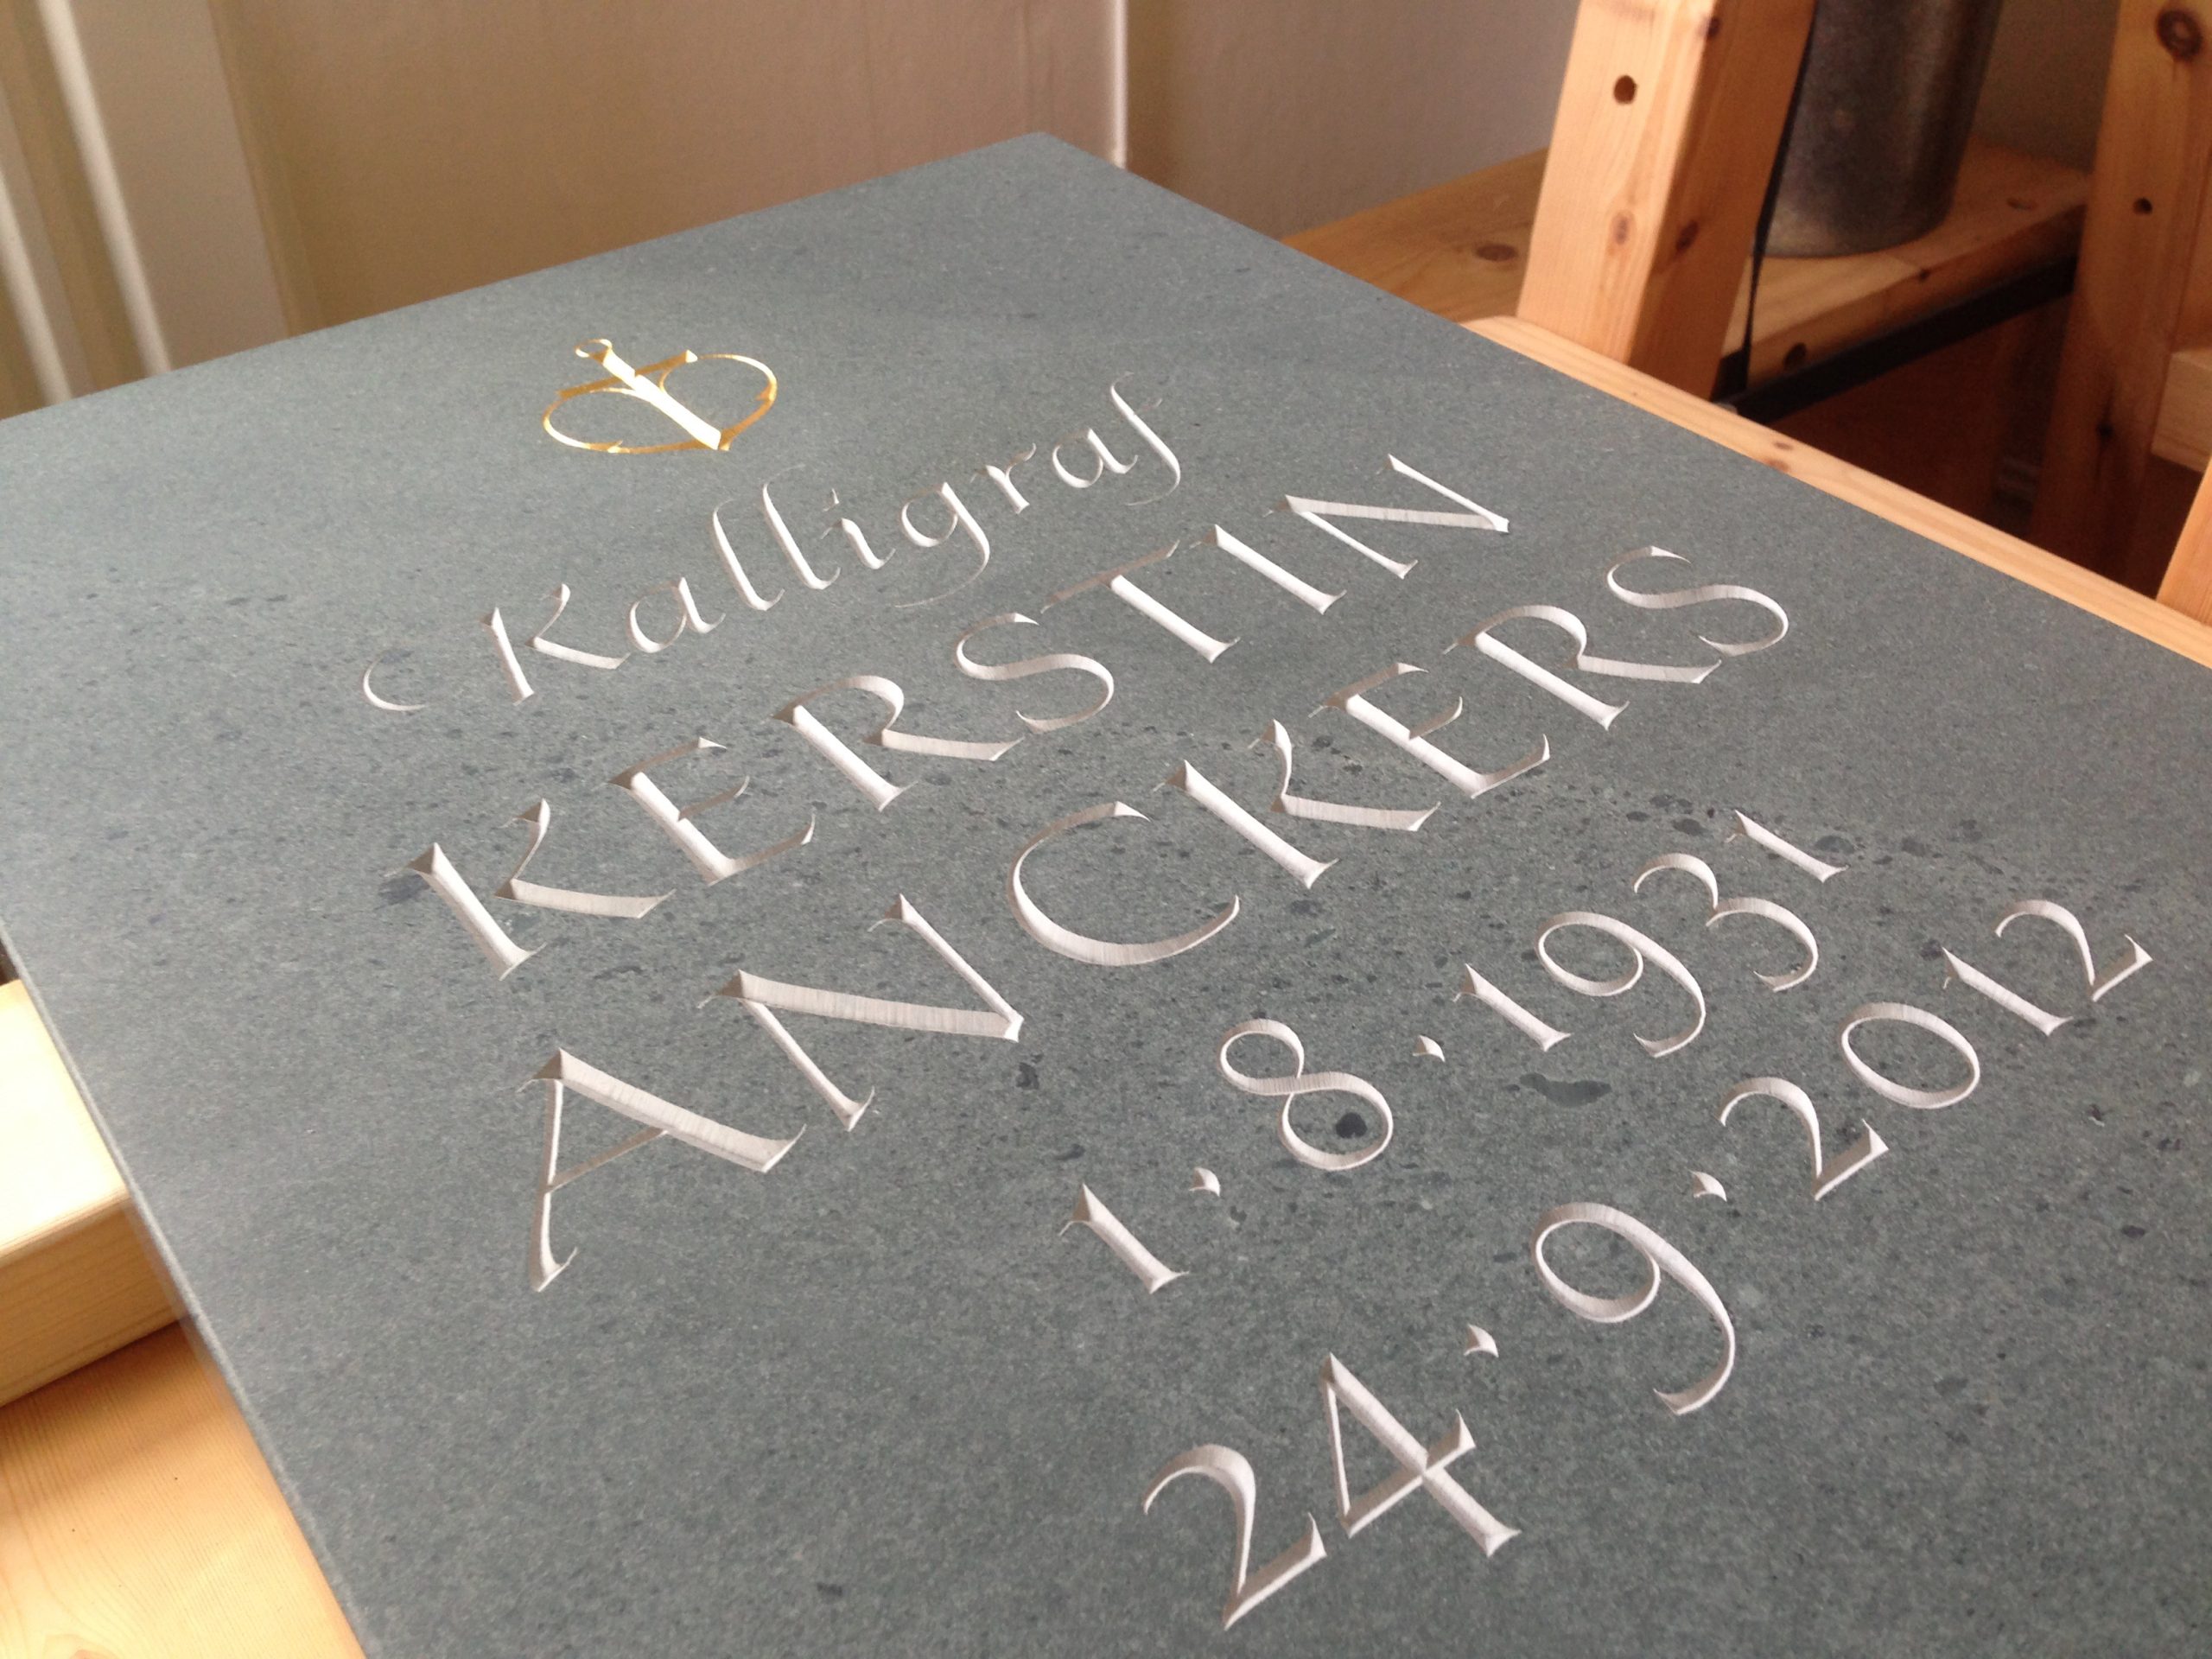 Kalligraf Kerstin Anckers gravsten.